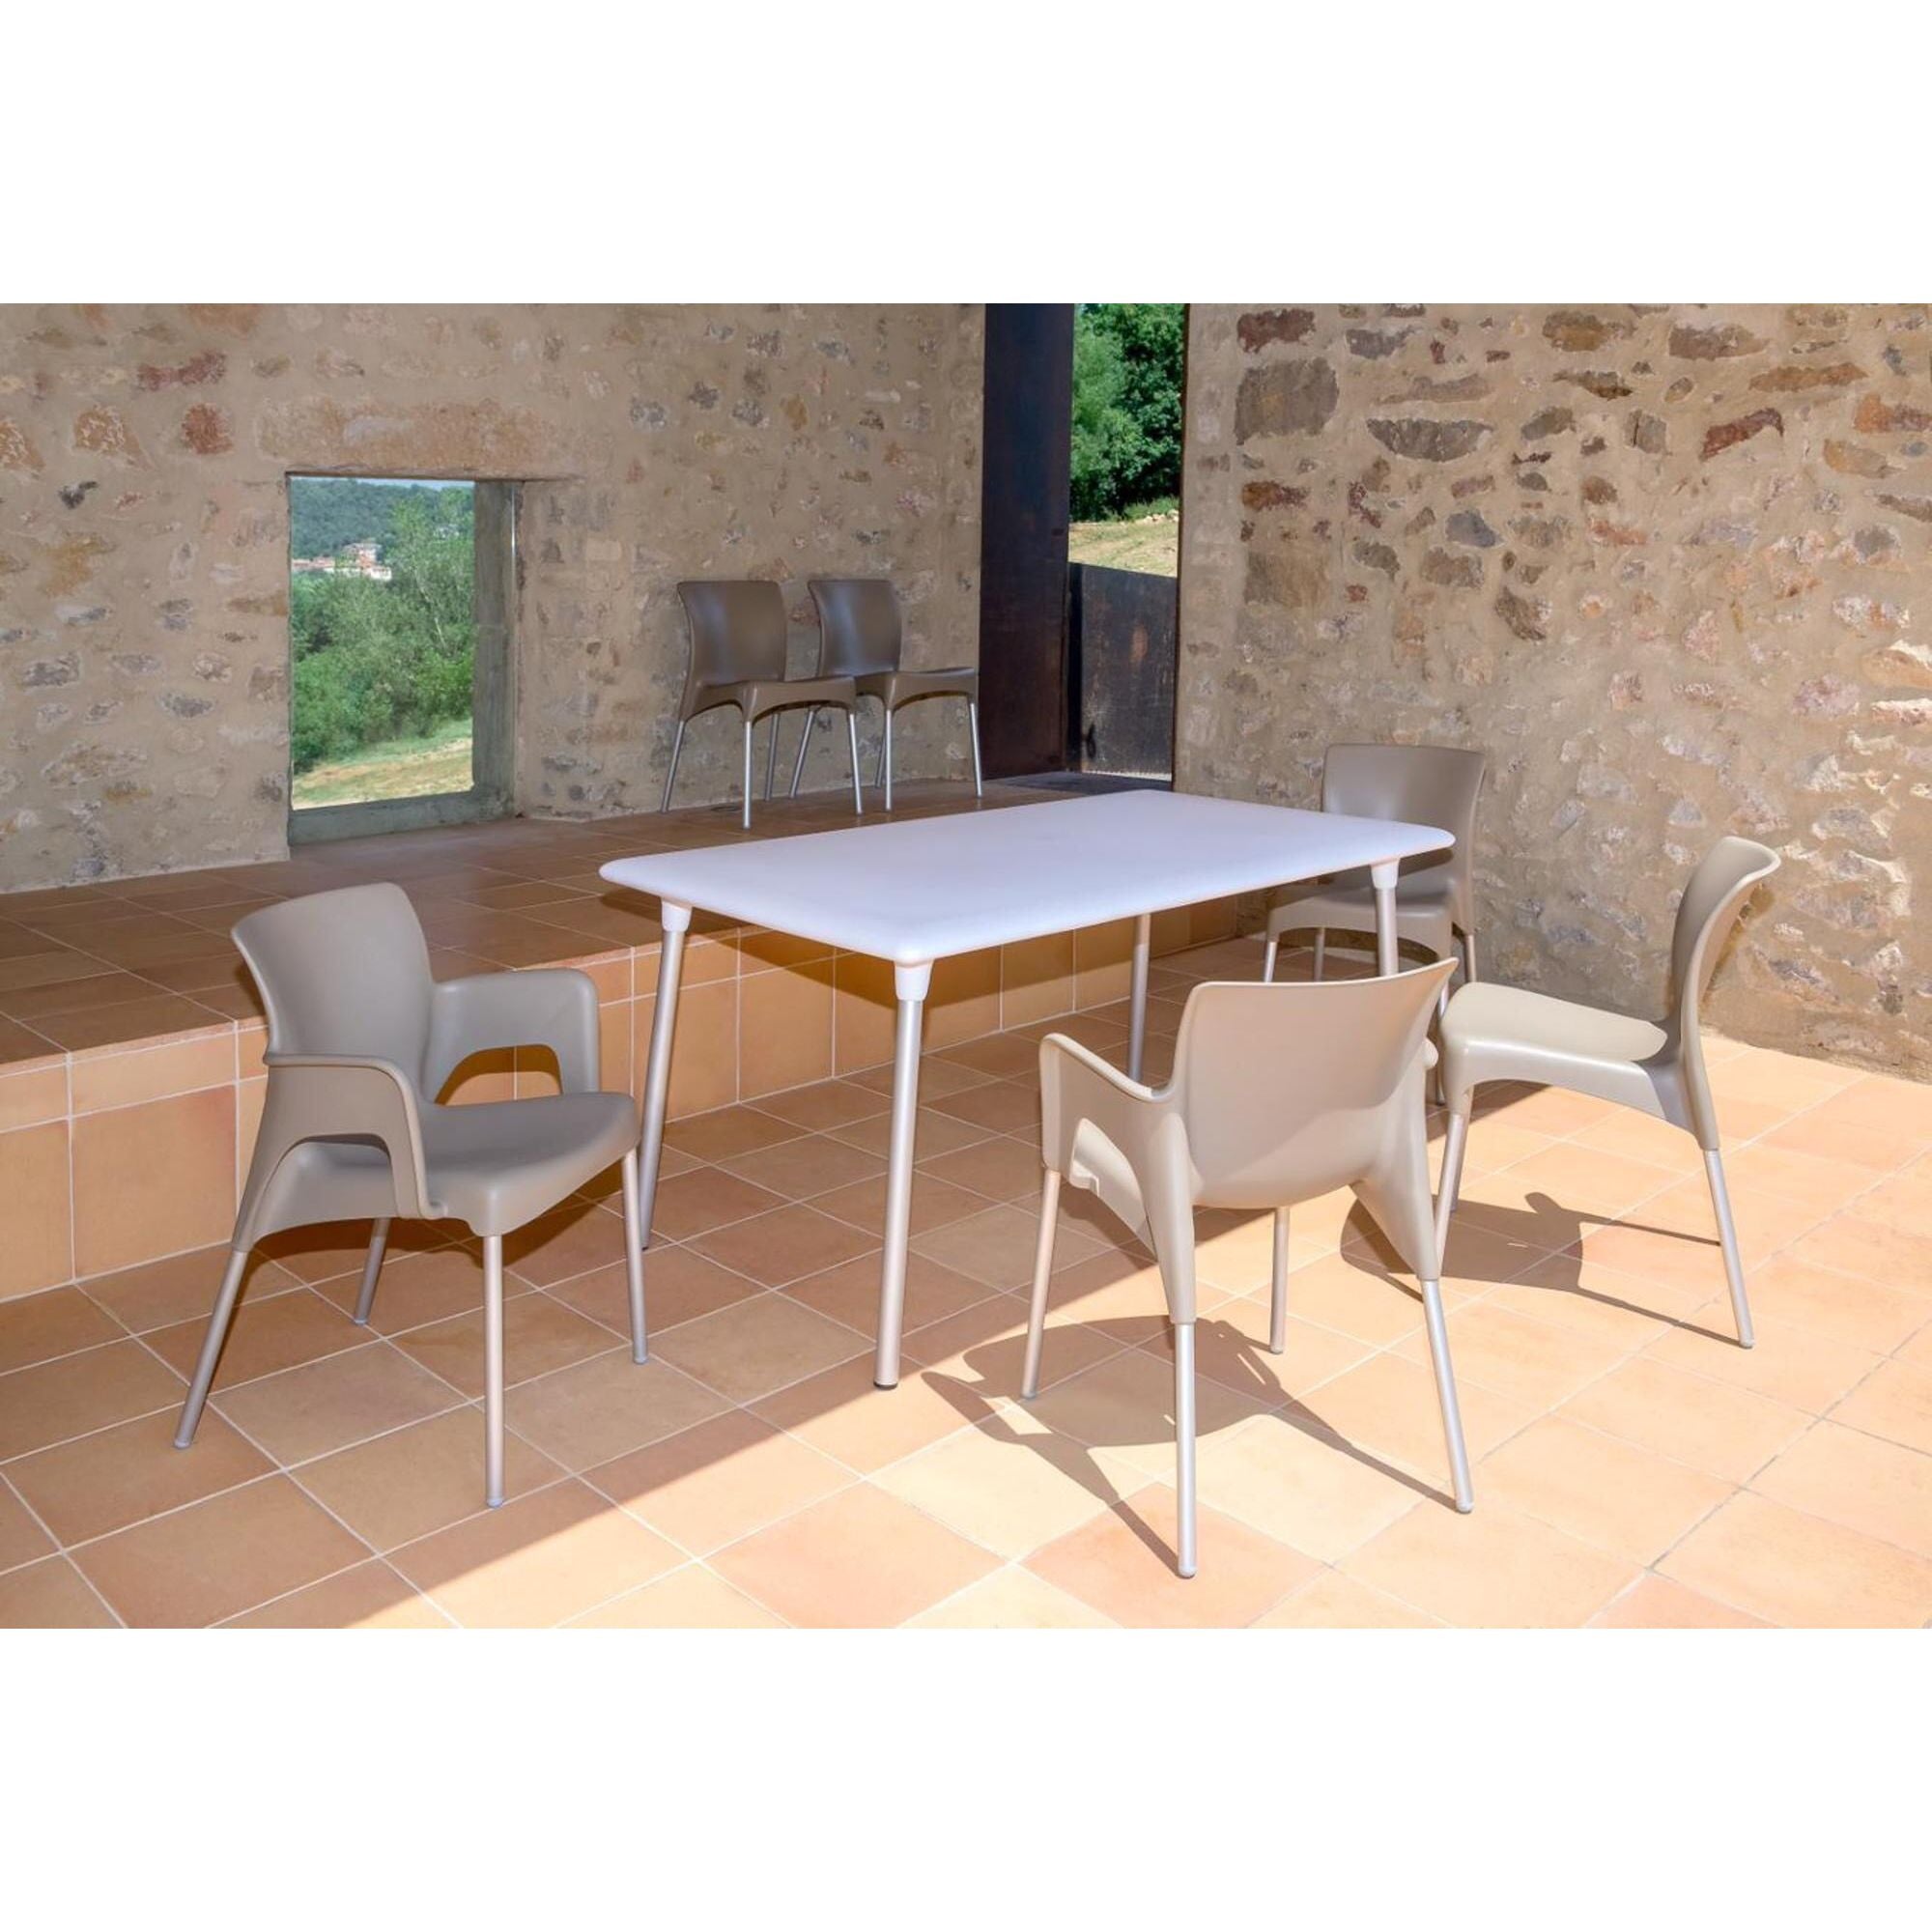 Resol new flash rectangular table indoors, outdoors 160x90